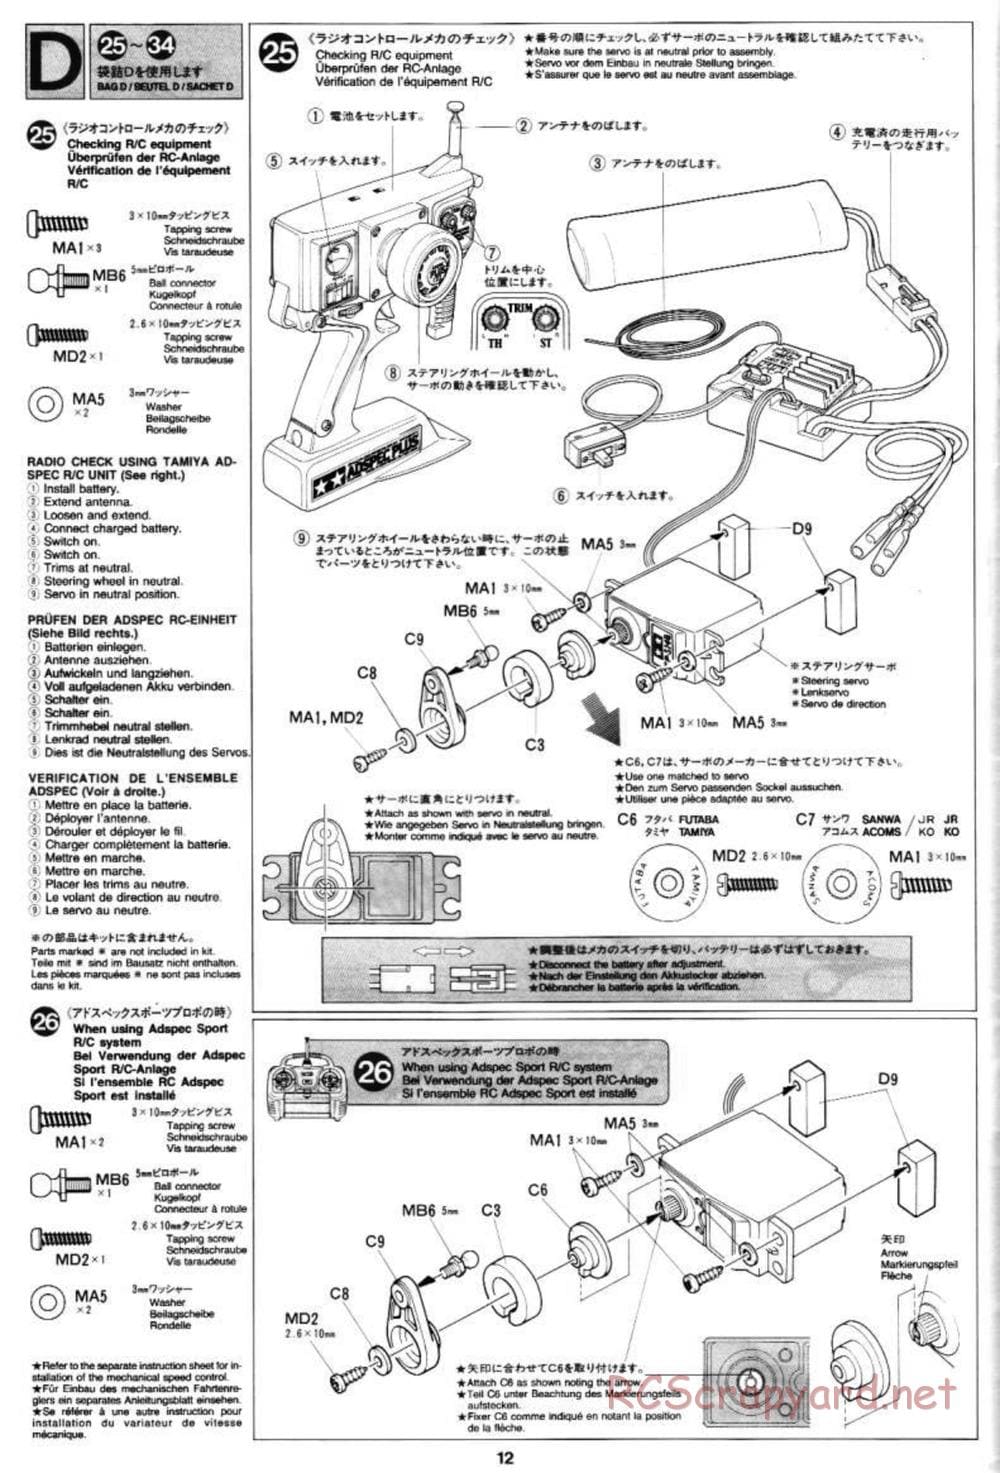 Tamiya - Blazing Star Chassis - Manual - Page 12